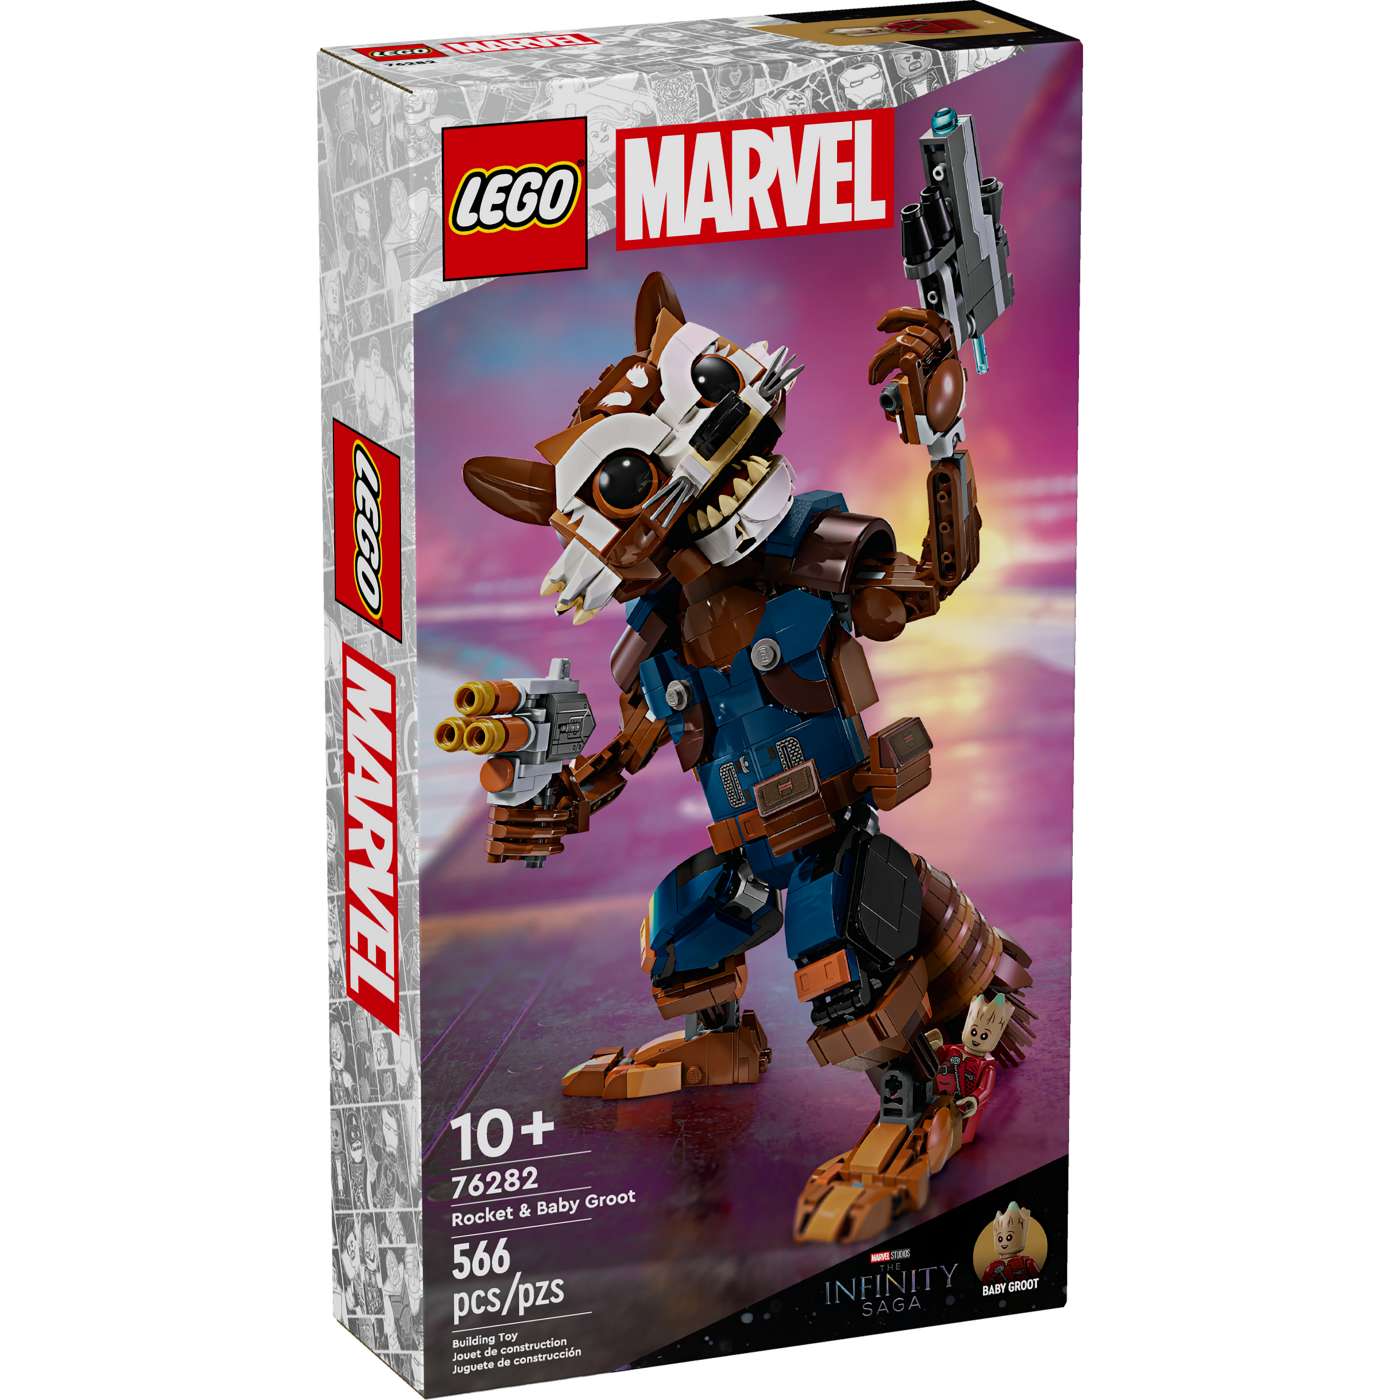 LEGO Marvel Rocket & Baby Groot Set; image 2 of 2